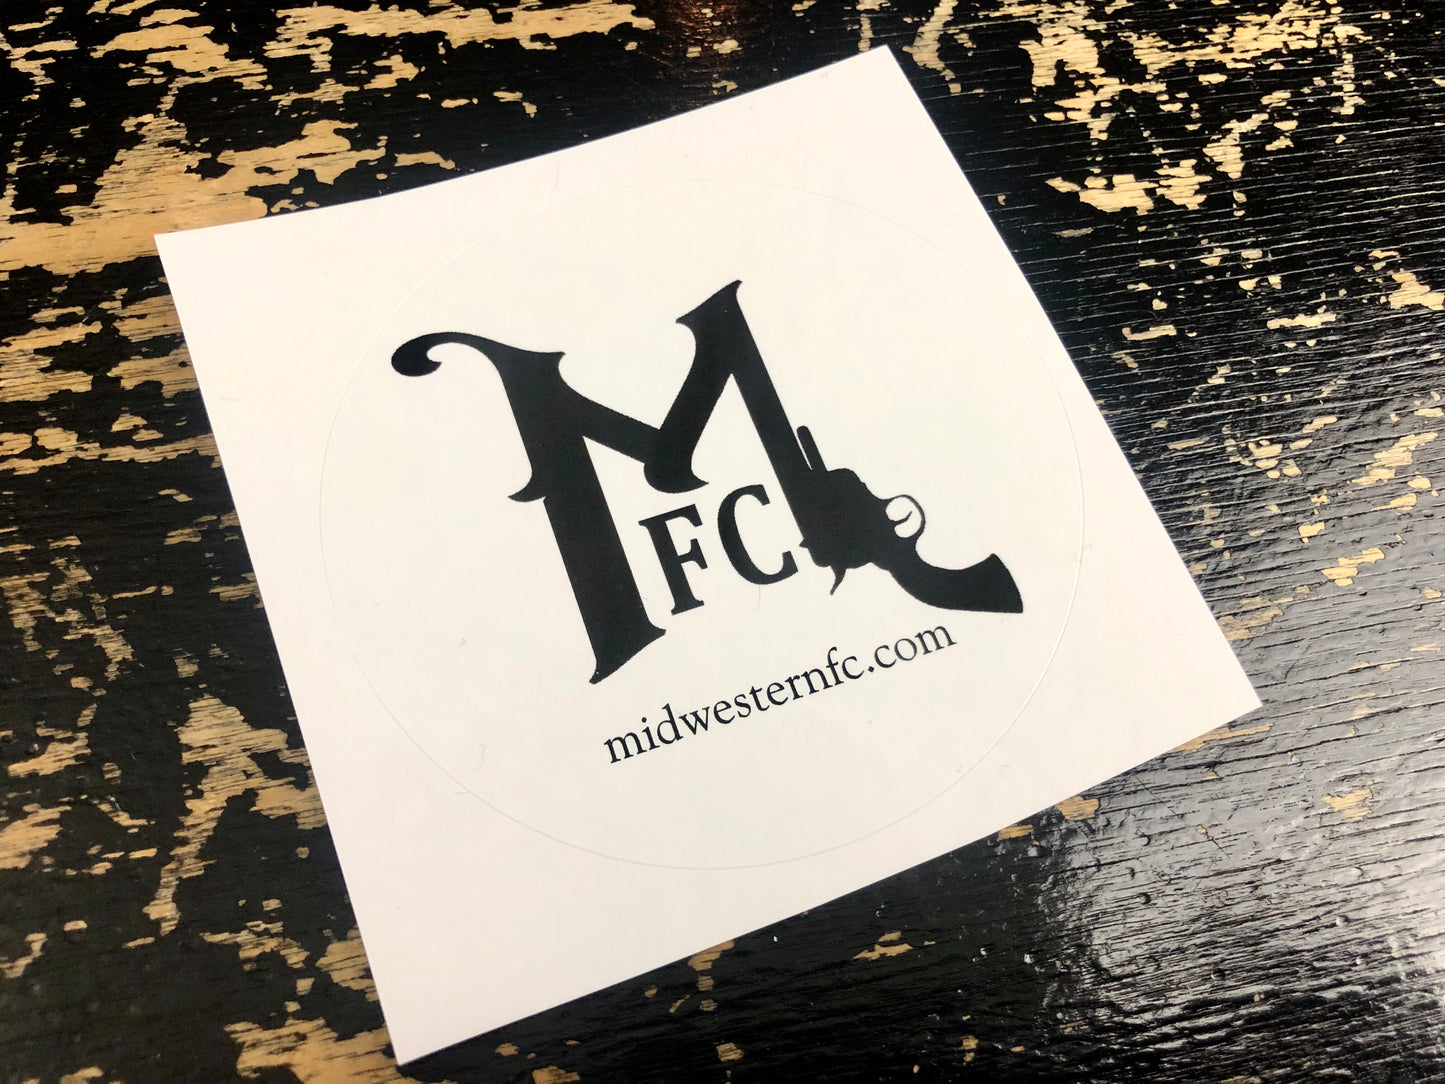 MFC logo sticker. Round & glossy.